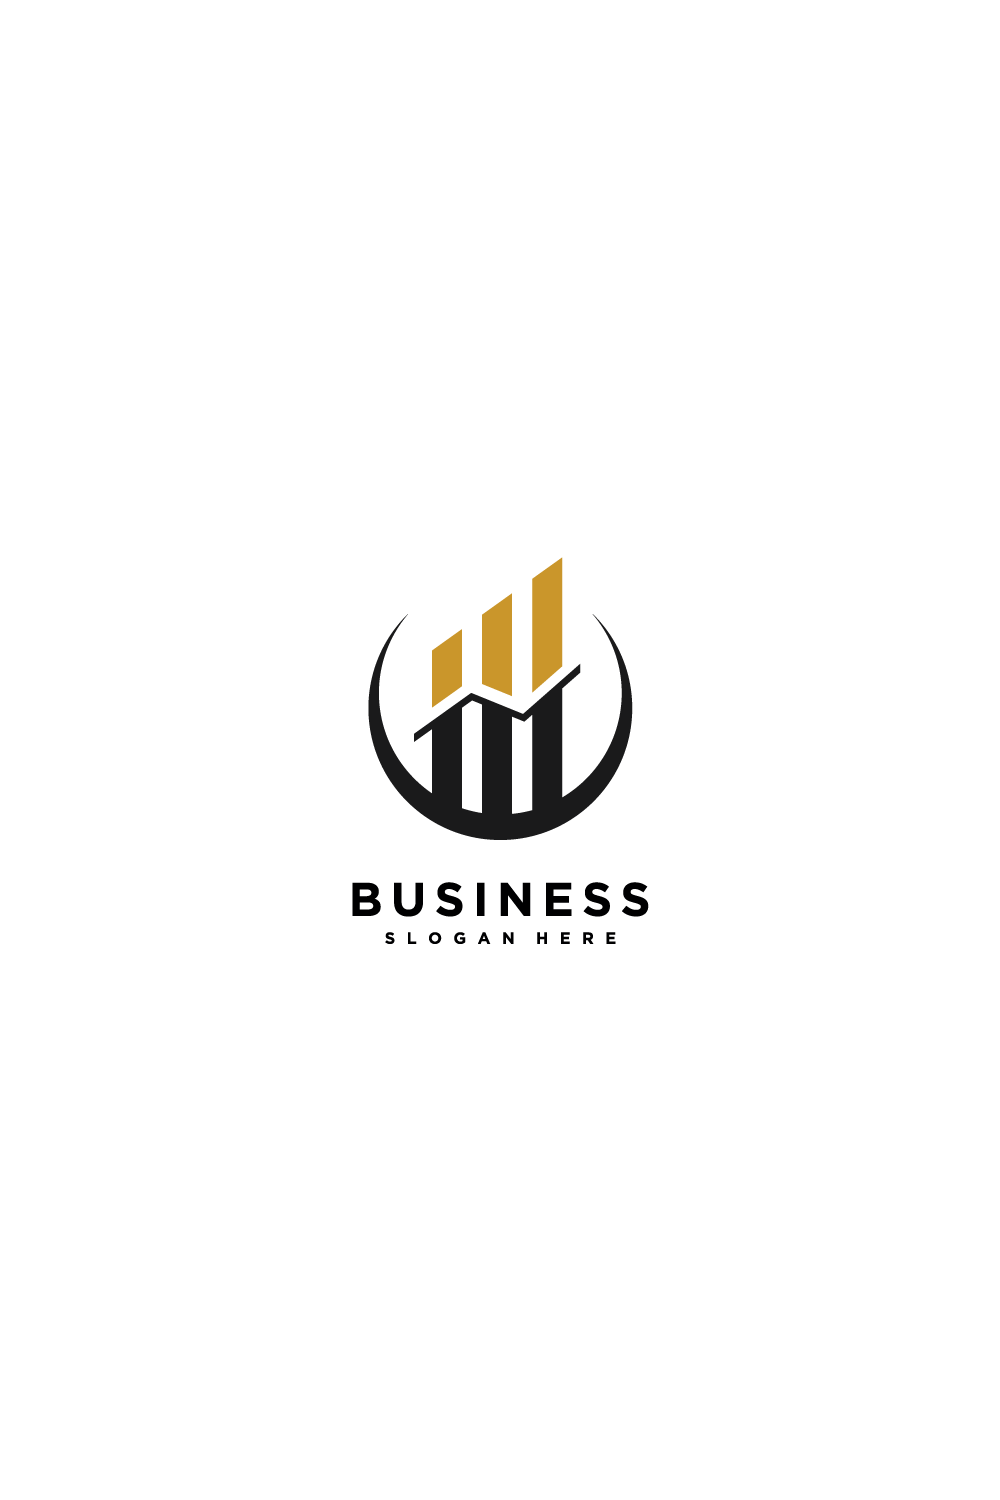 business finance logo design pinterest preview image.